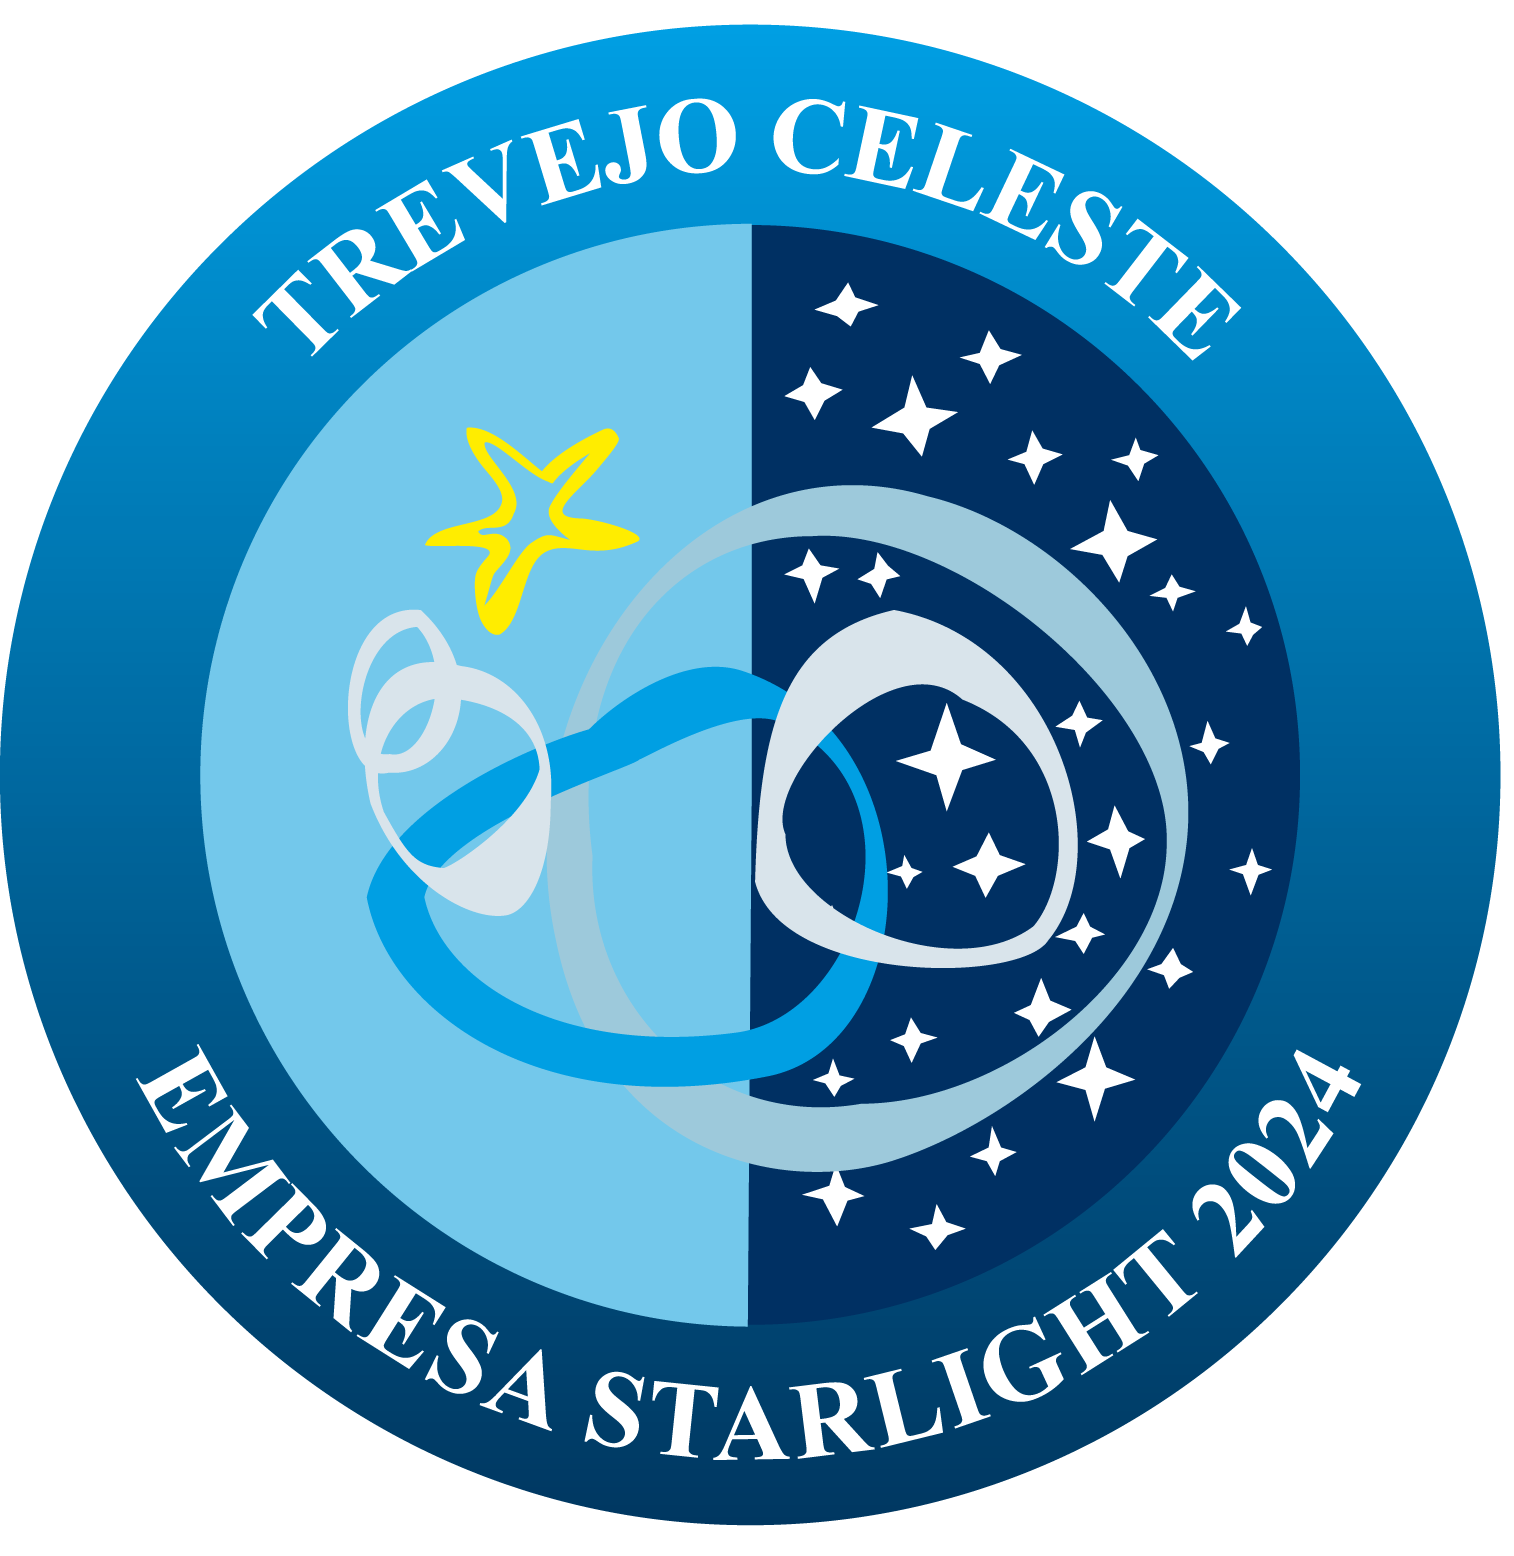 sello del Certificado Starlight para la empresa Trevejo Celeste